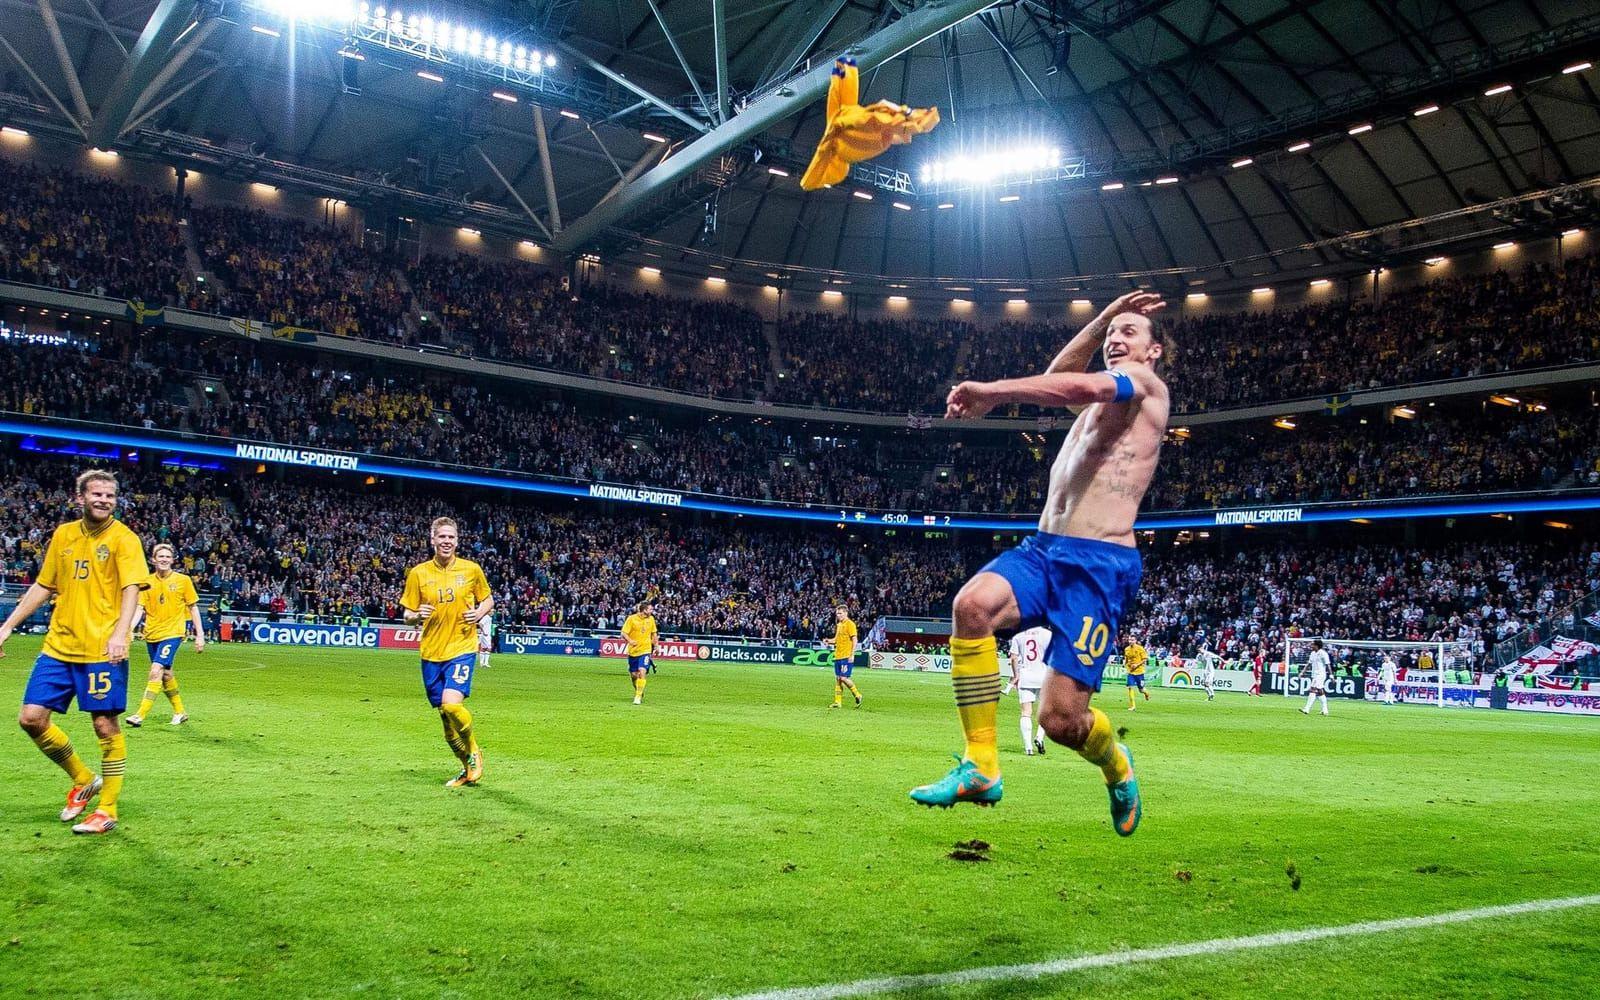 Ibrahimović bjöd på en fantastisk målshow på nationalarenan i Solna. Foto: Bildbyrån